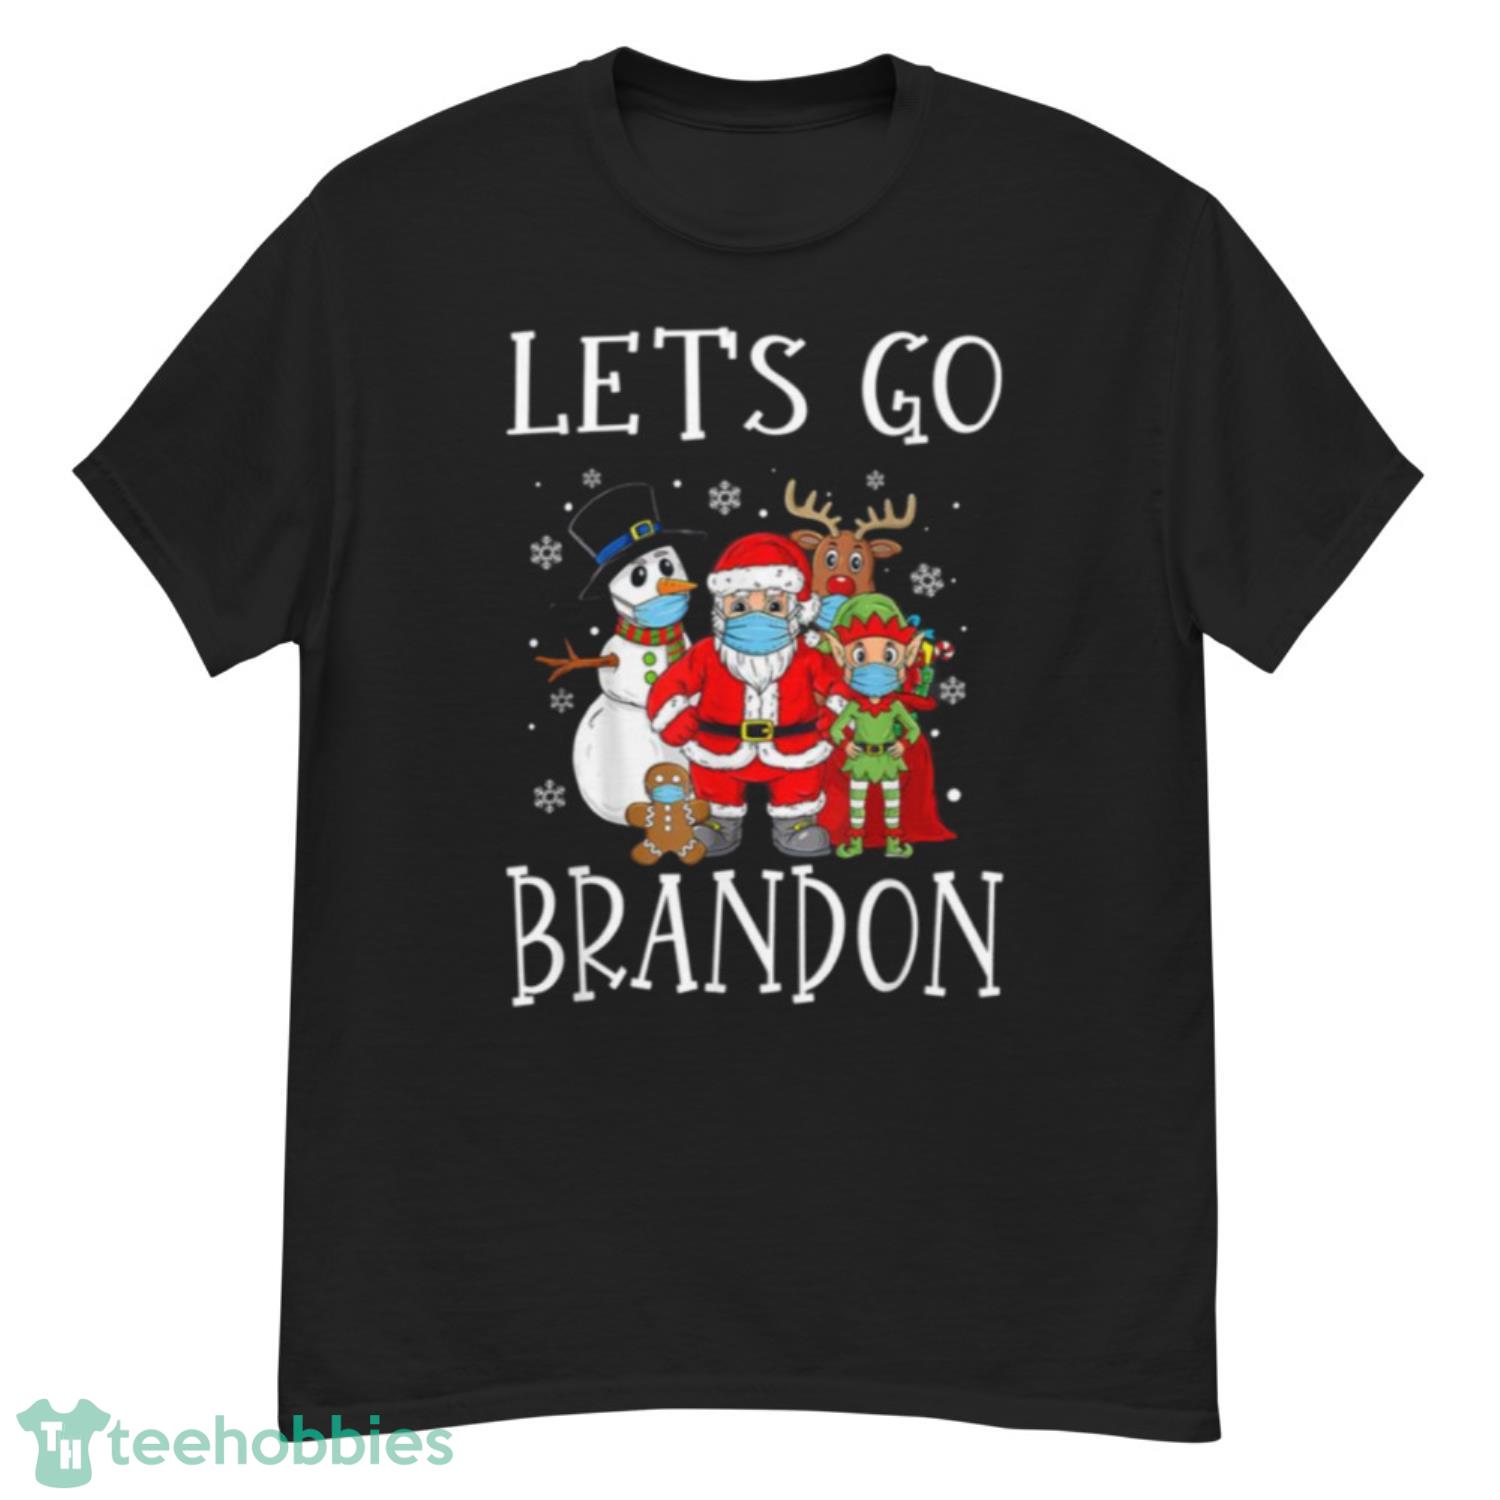 Let’s Go Branden Funny Christmas 2021 Santa And Friends Shirt - G500 Men’s Classic T-Shirt